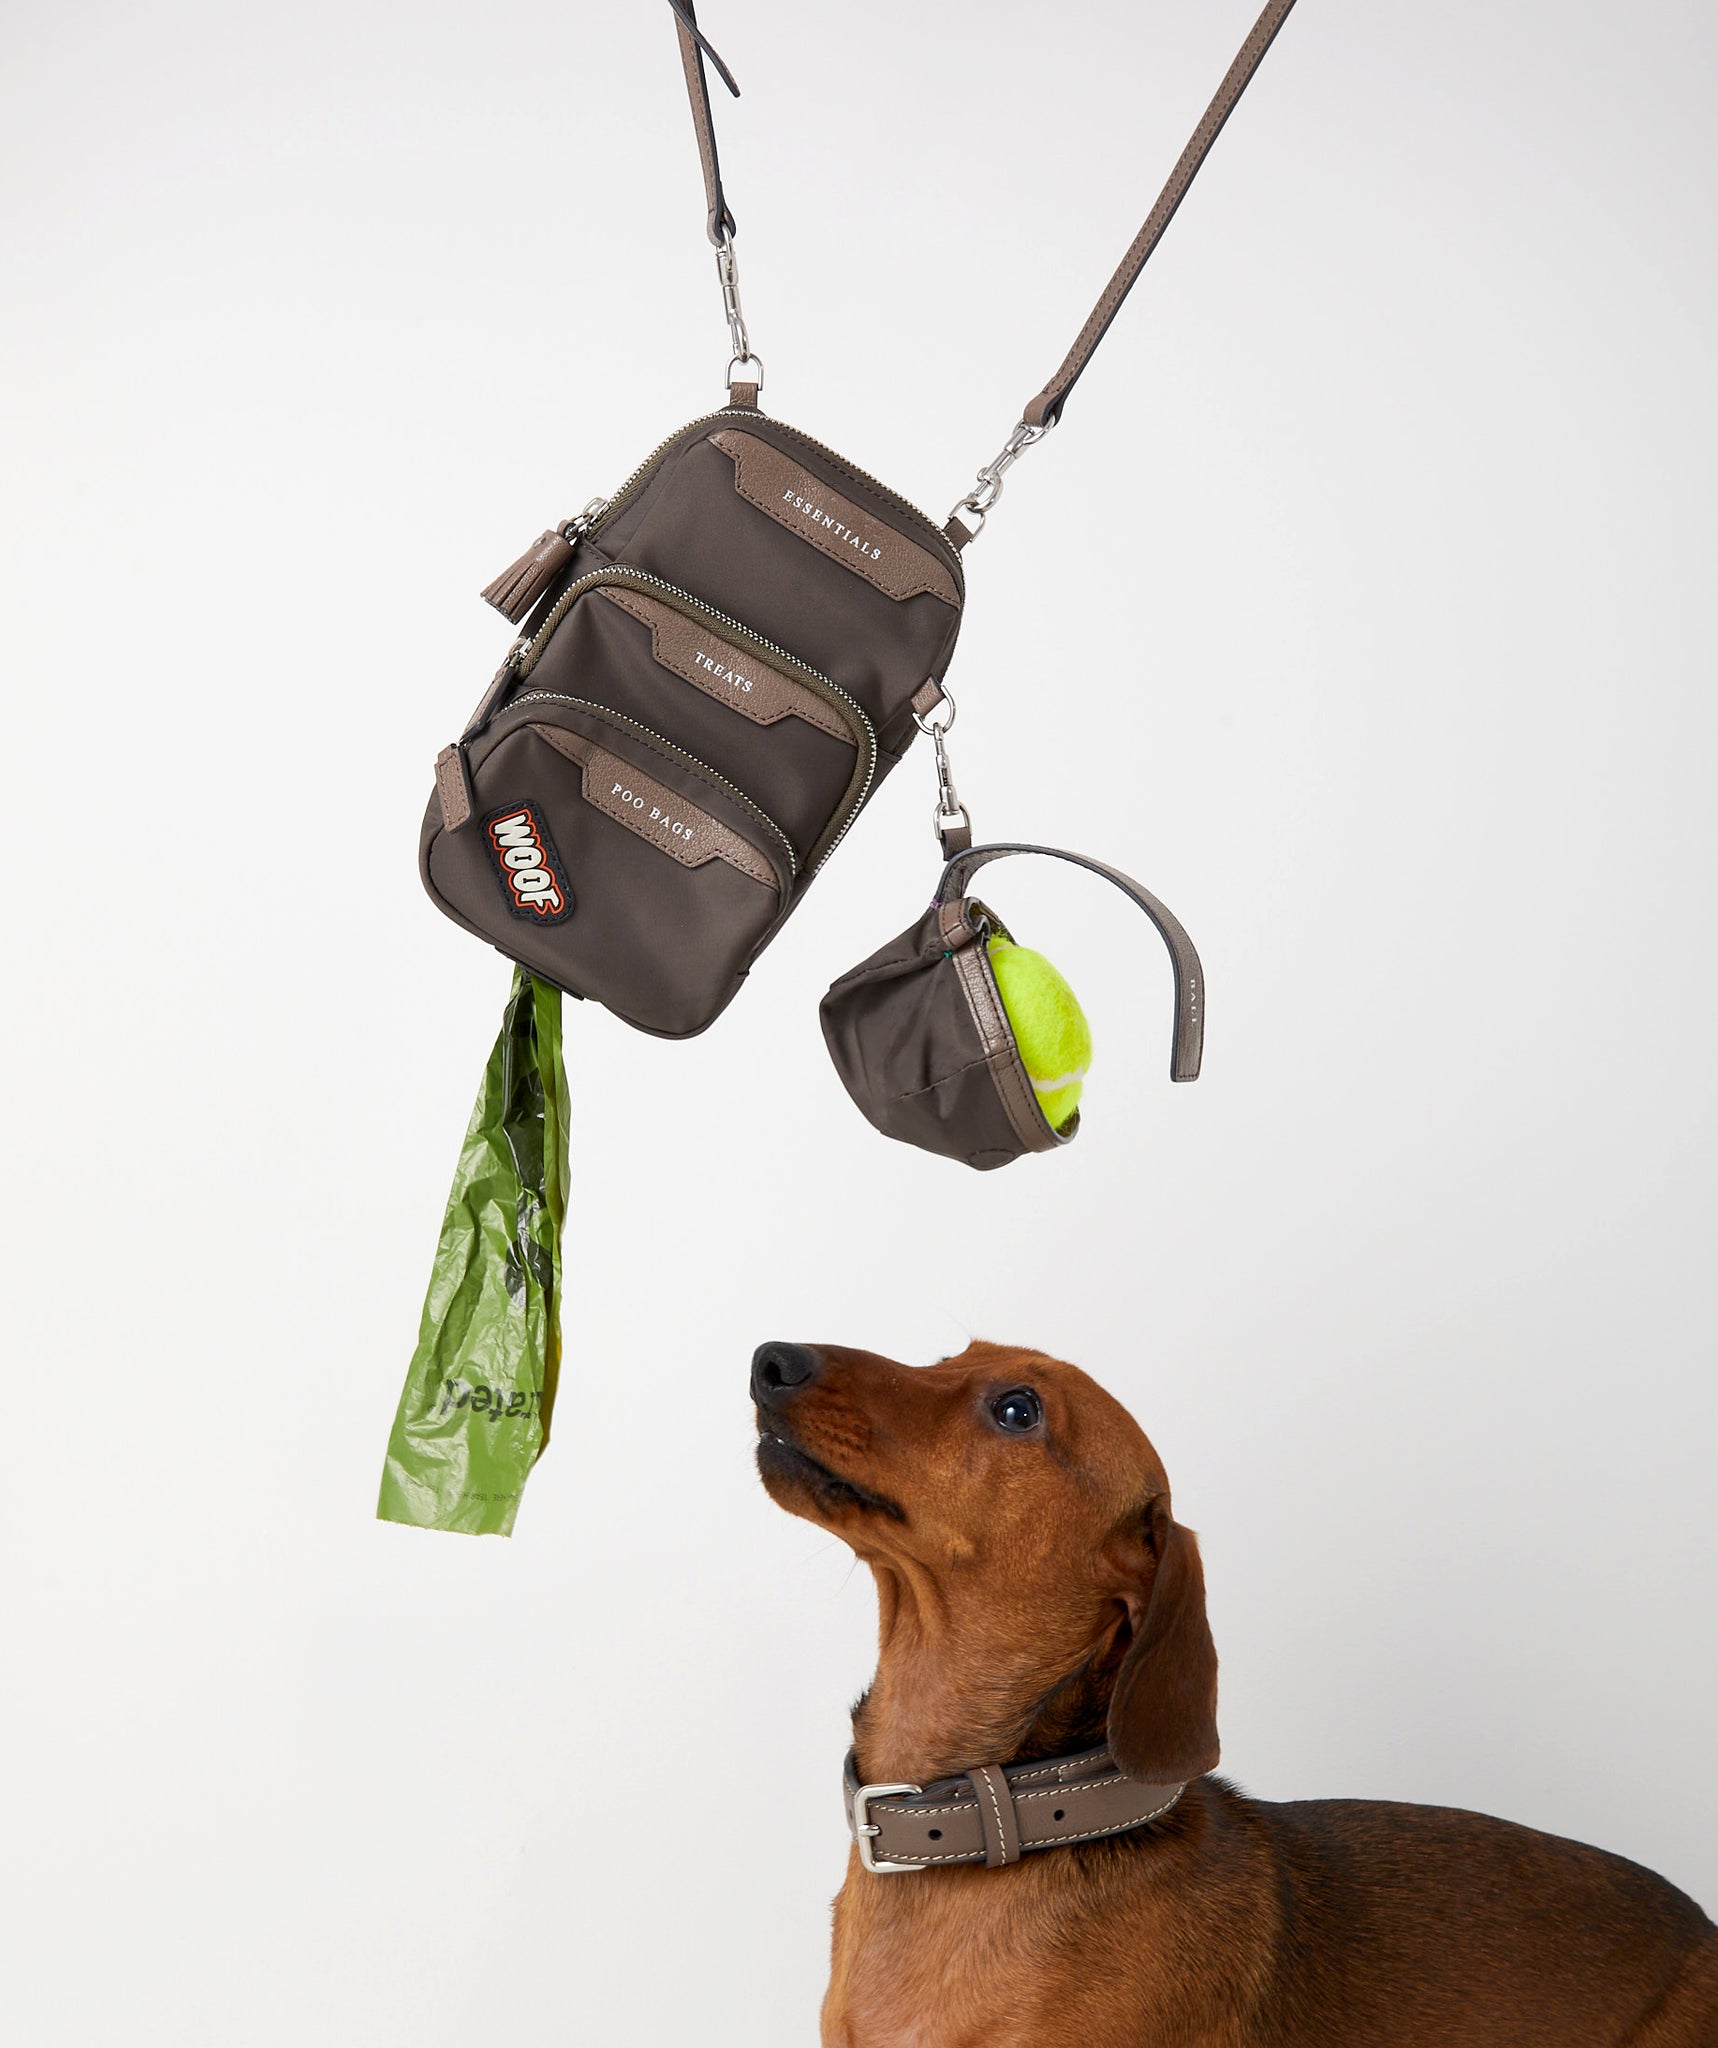 Anya Hindmarch Dog-Shaped Poo Bag Charm